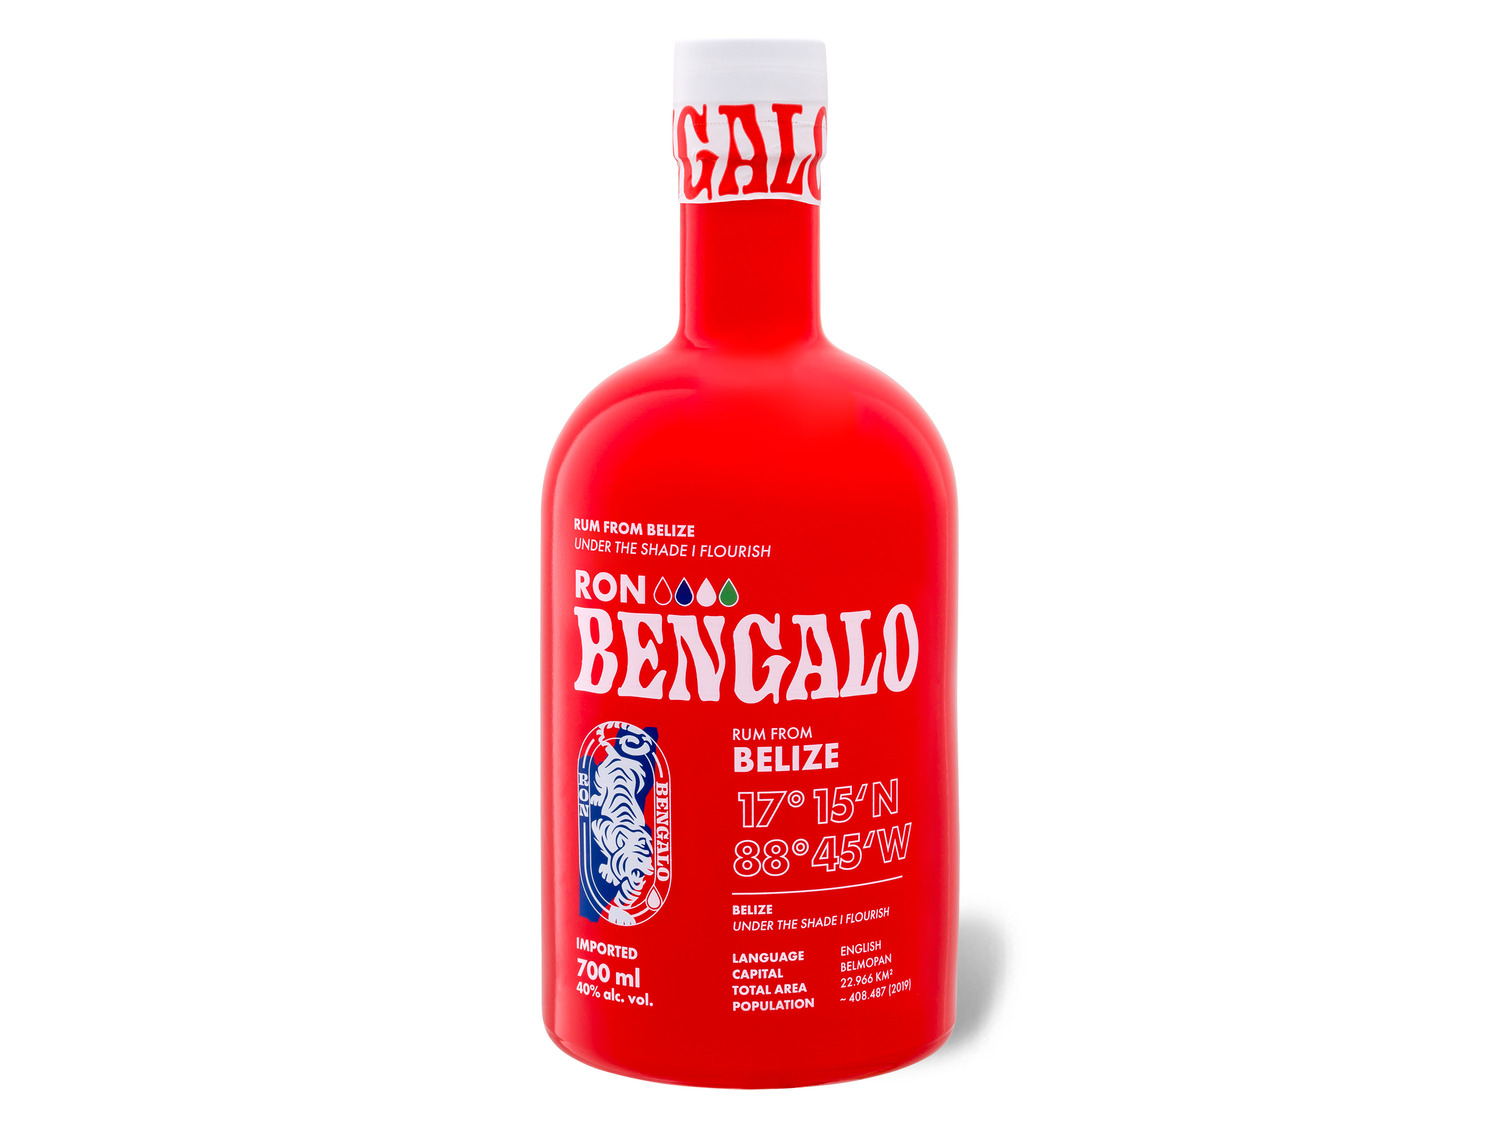 Ron Bengalo 40% LIDL Vol Rum online Belize | kaufen